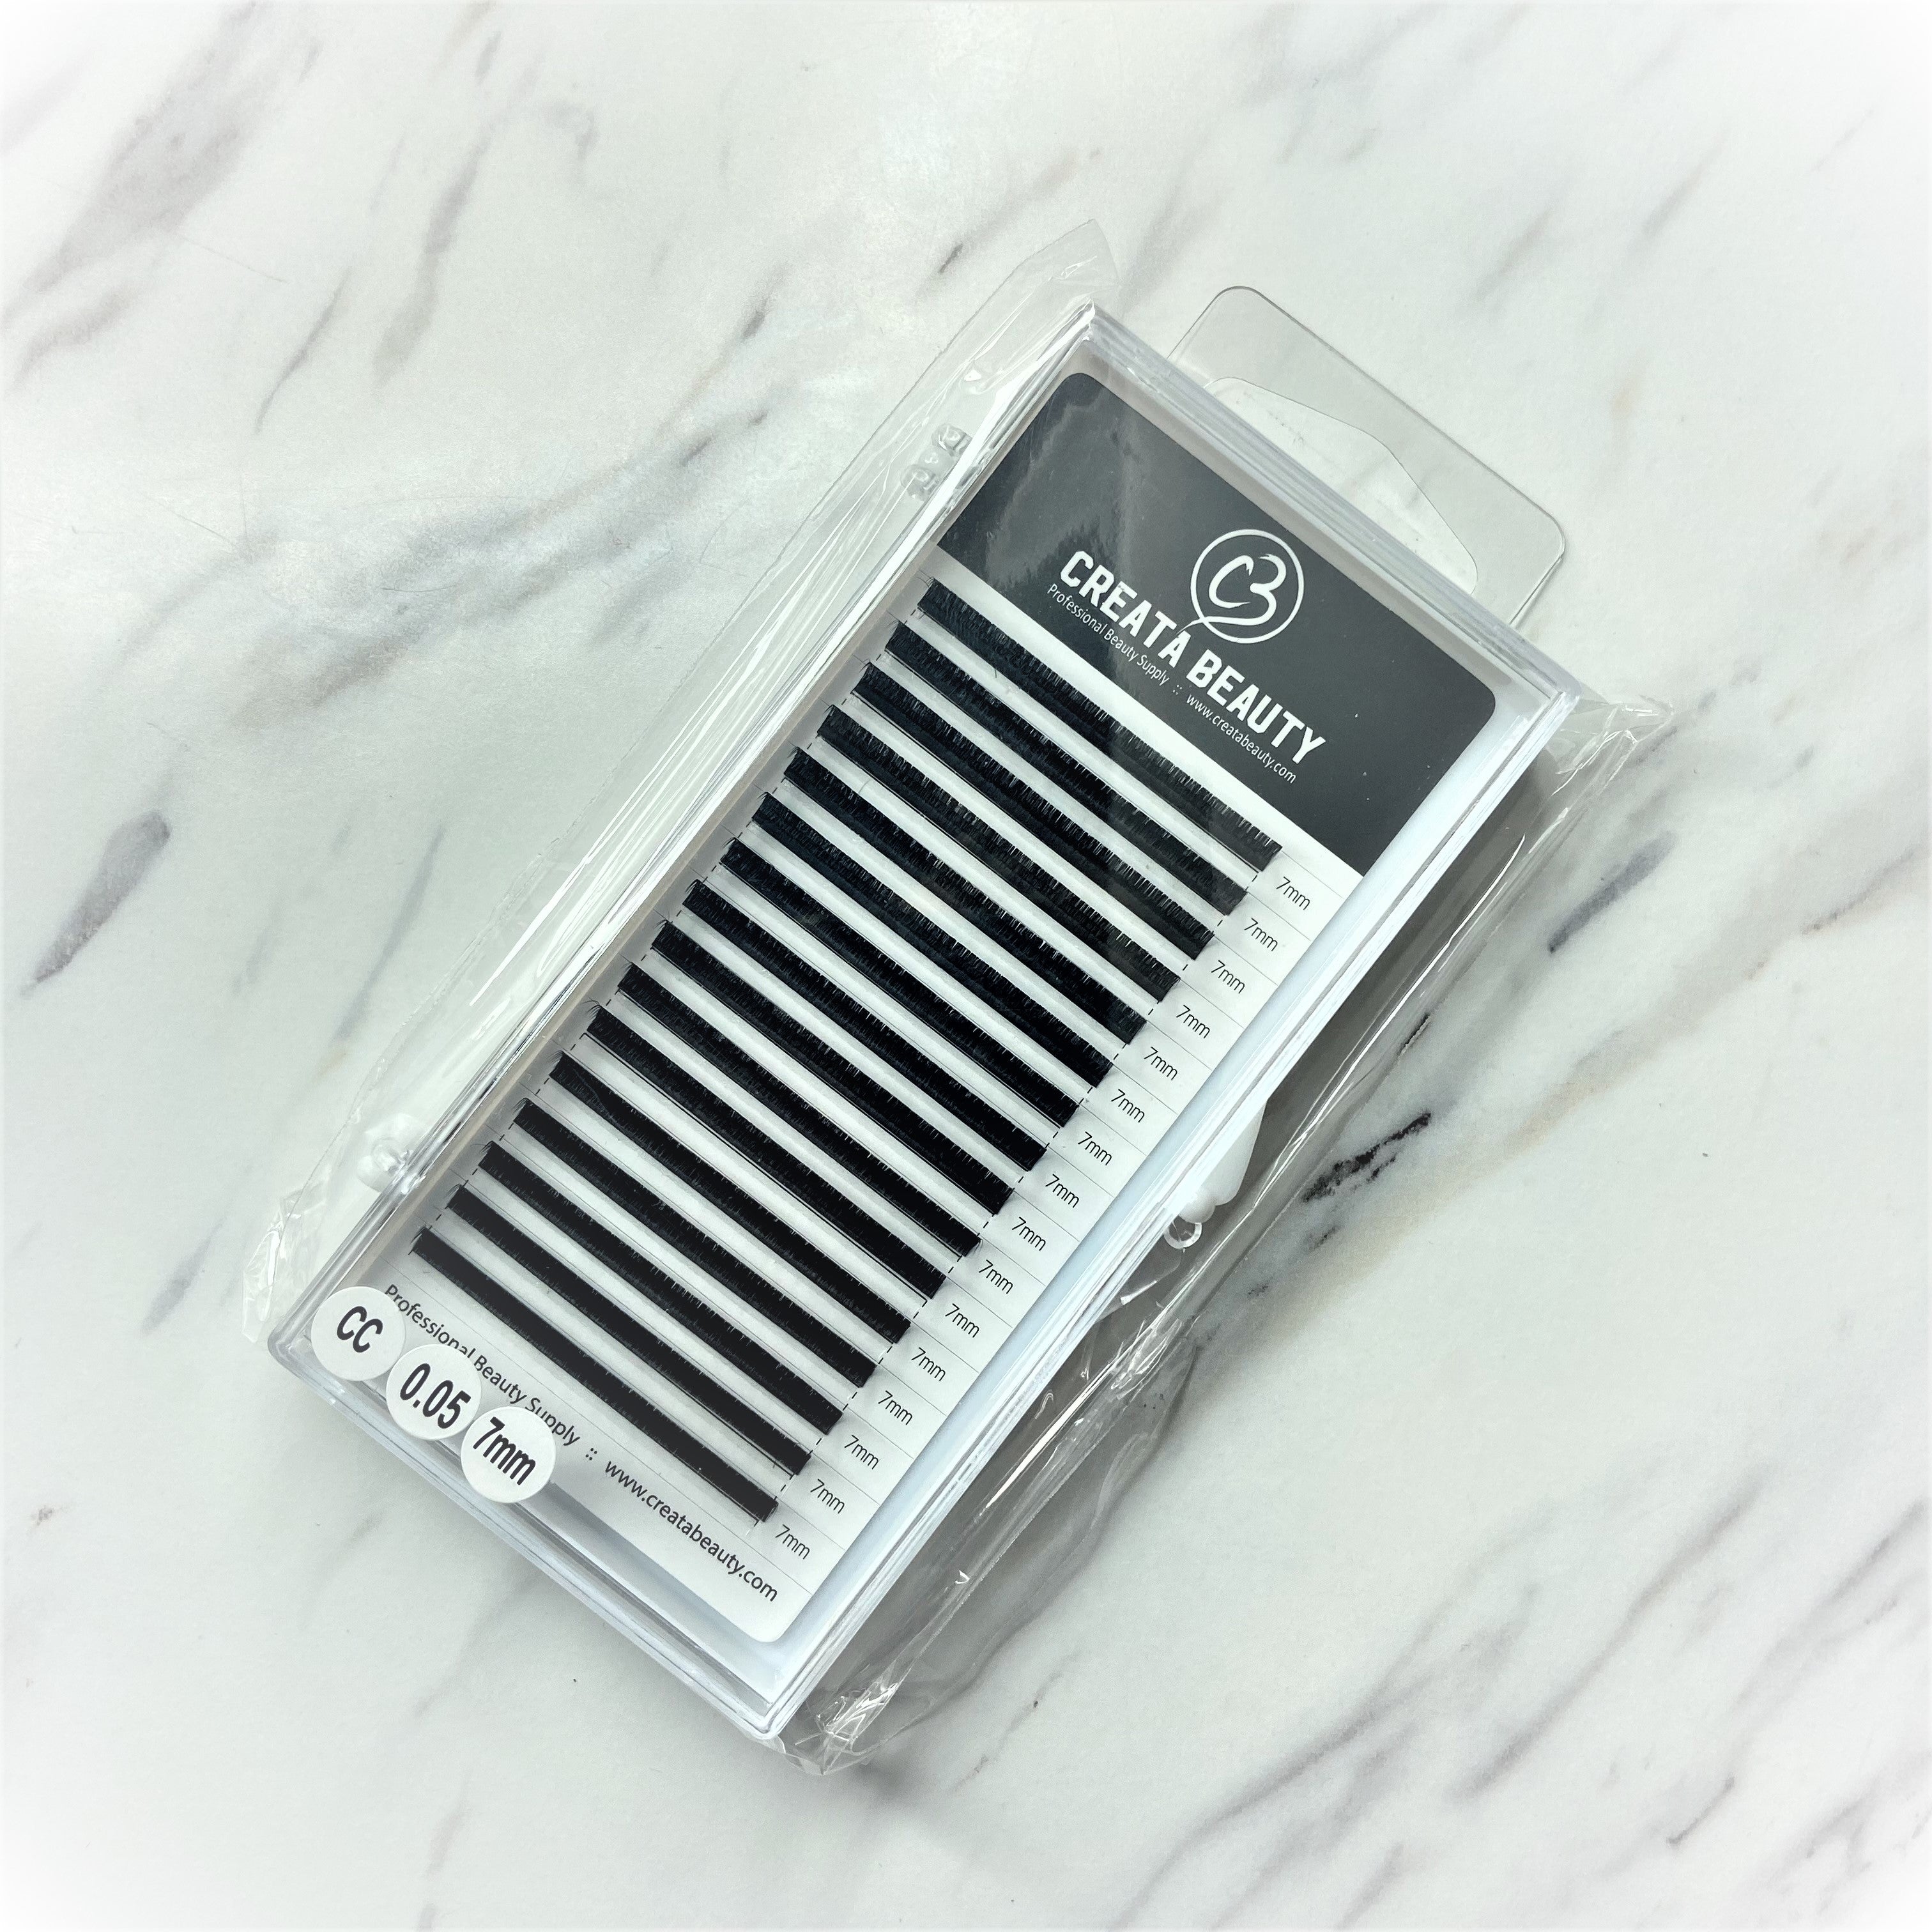 Creata Beauty Signature CC-Curl Lash Tray - 0.05mm - Creata Beauty - Professional Beauty Products